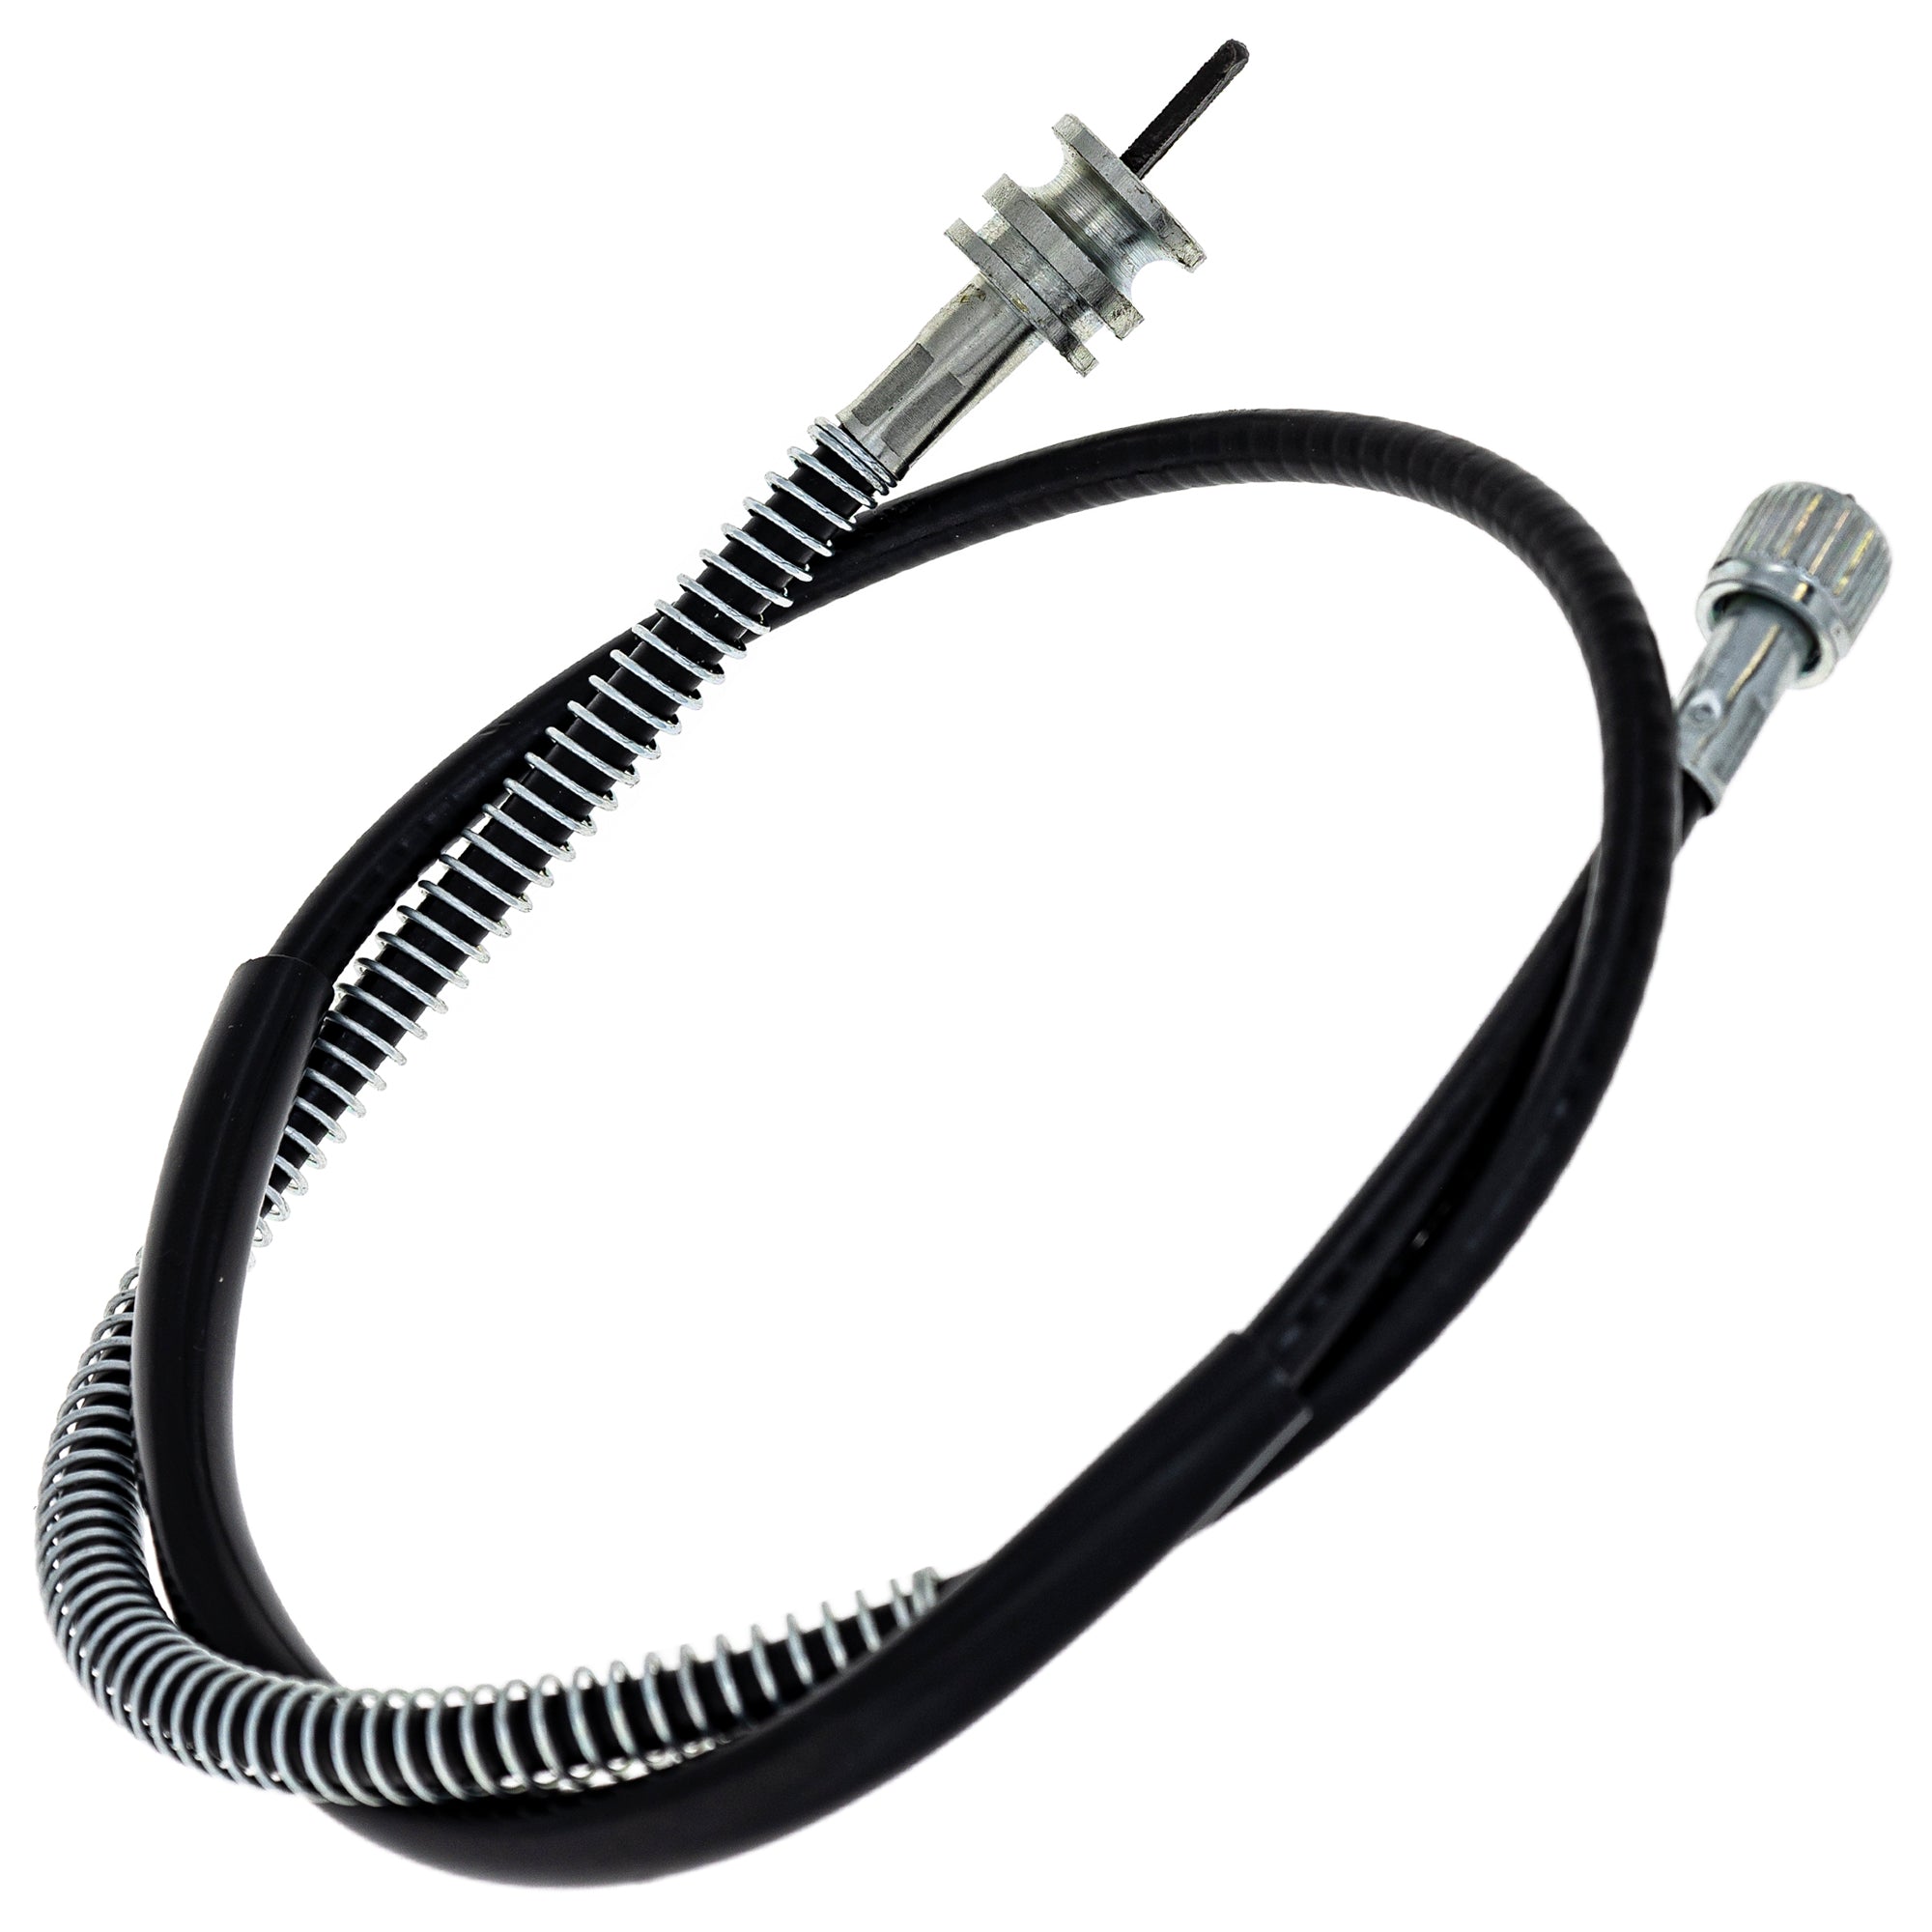 Tachometer Cable for Yamaha XT250 XT350 30X-83560-01-00 Motorcycle